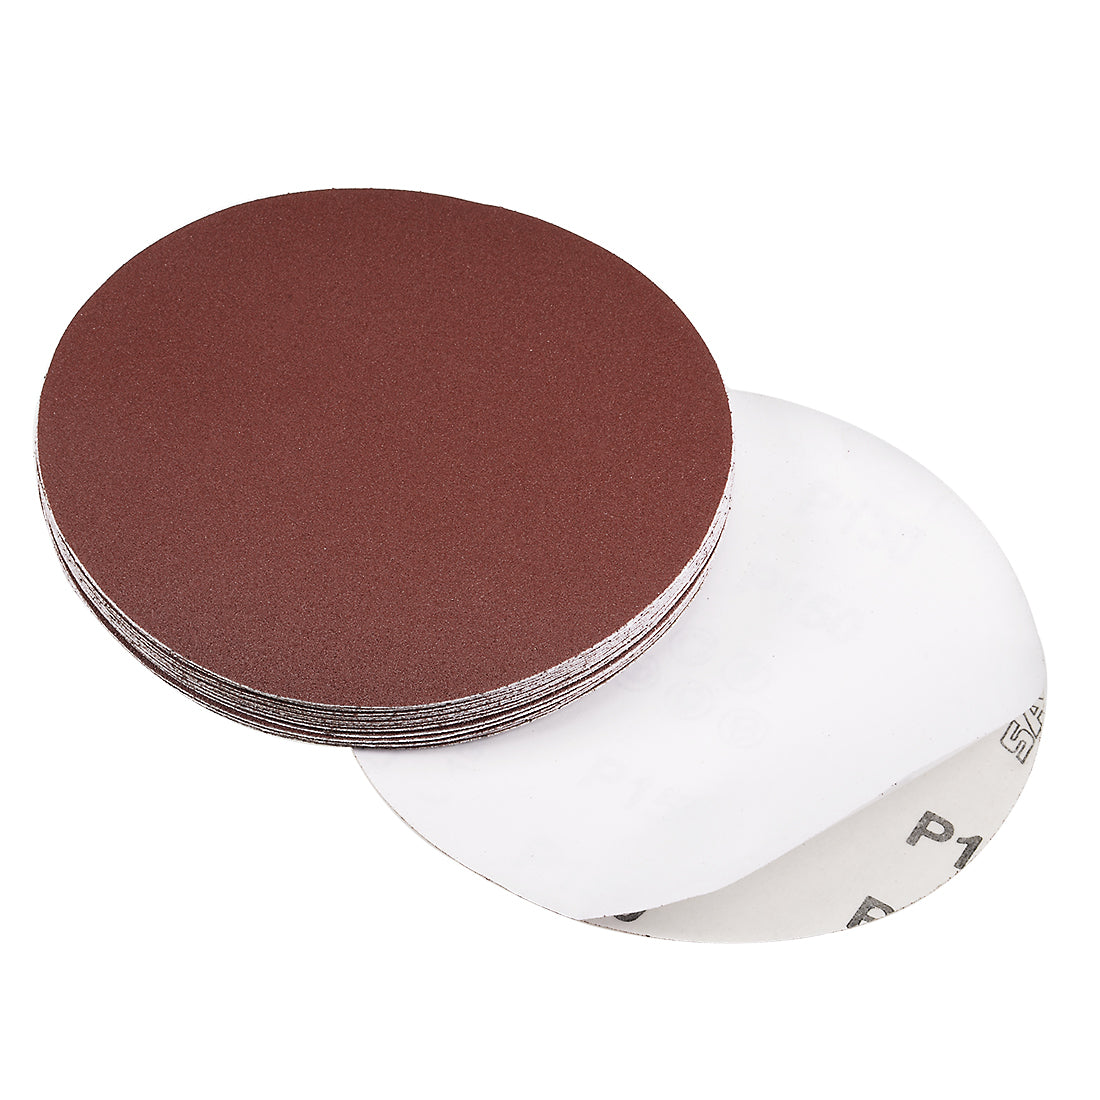 uxcell Uxcell 6-inch 150-Grits PSA Sanding Disc, Adhesive-Backed Sanding Sheets Aluminum Oxide Sandpaper for Random Orbital Sander 20pcs